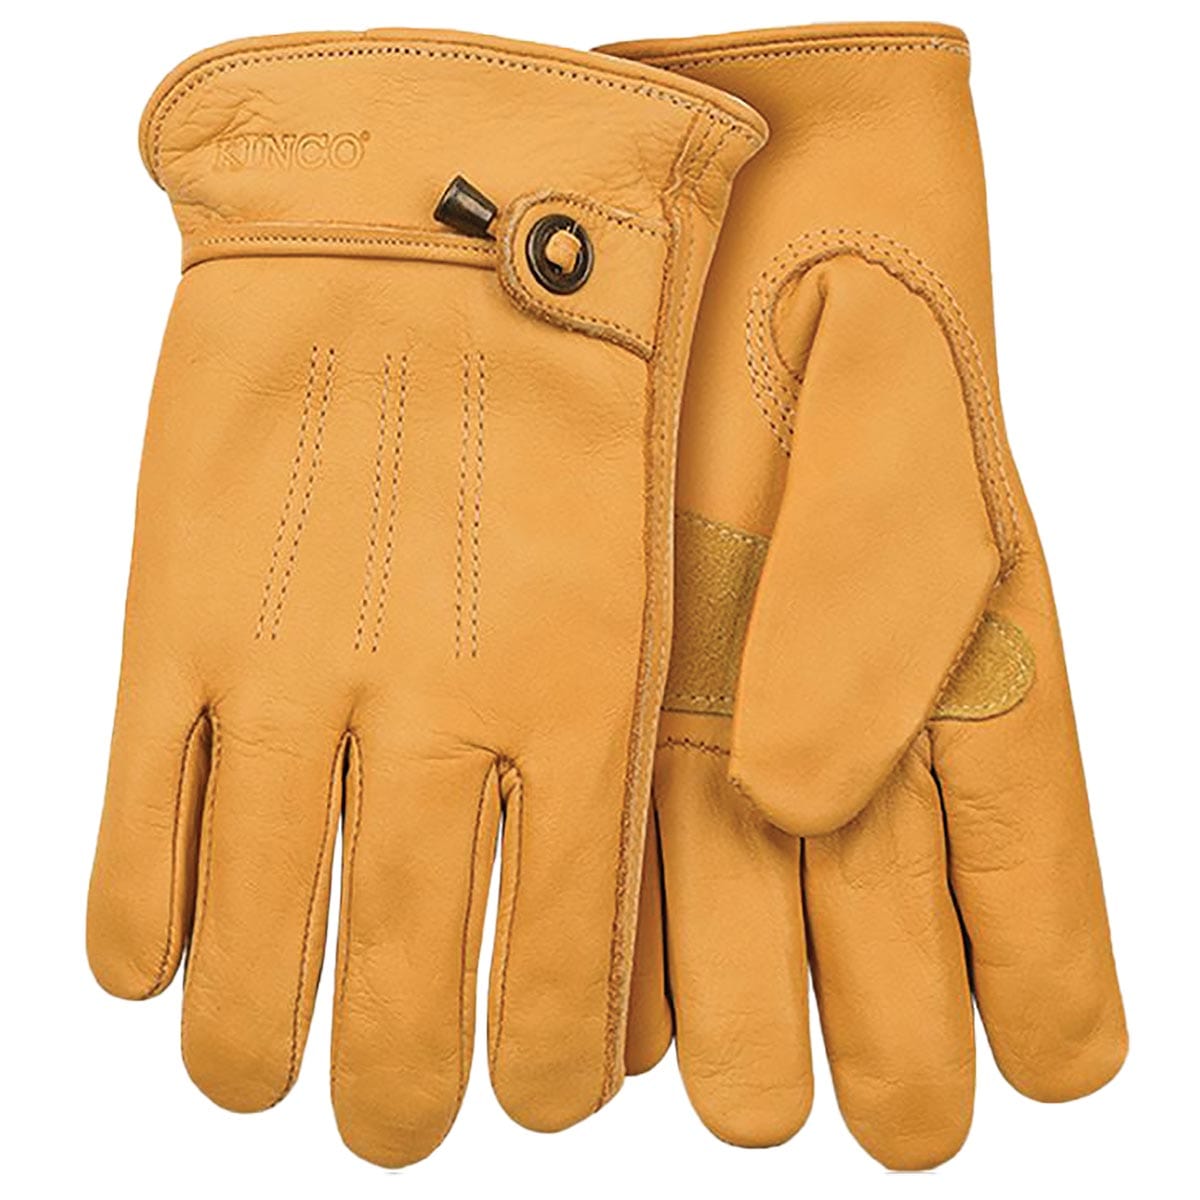 Kinco Premium Gain Cowhide Driver Gloves with Pull-Strap